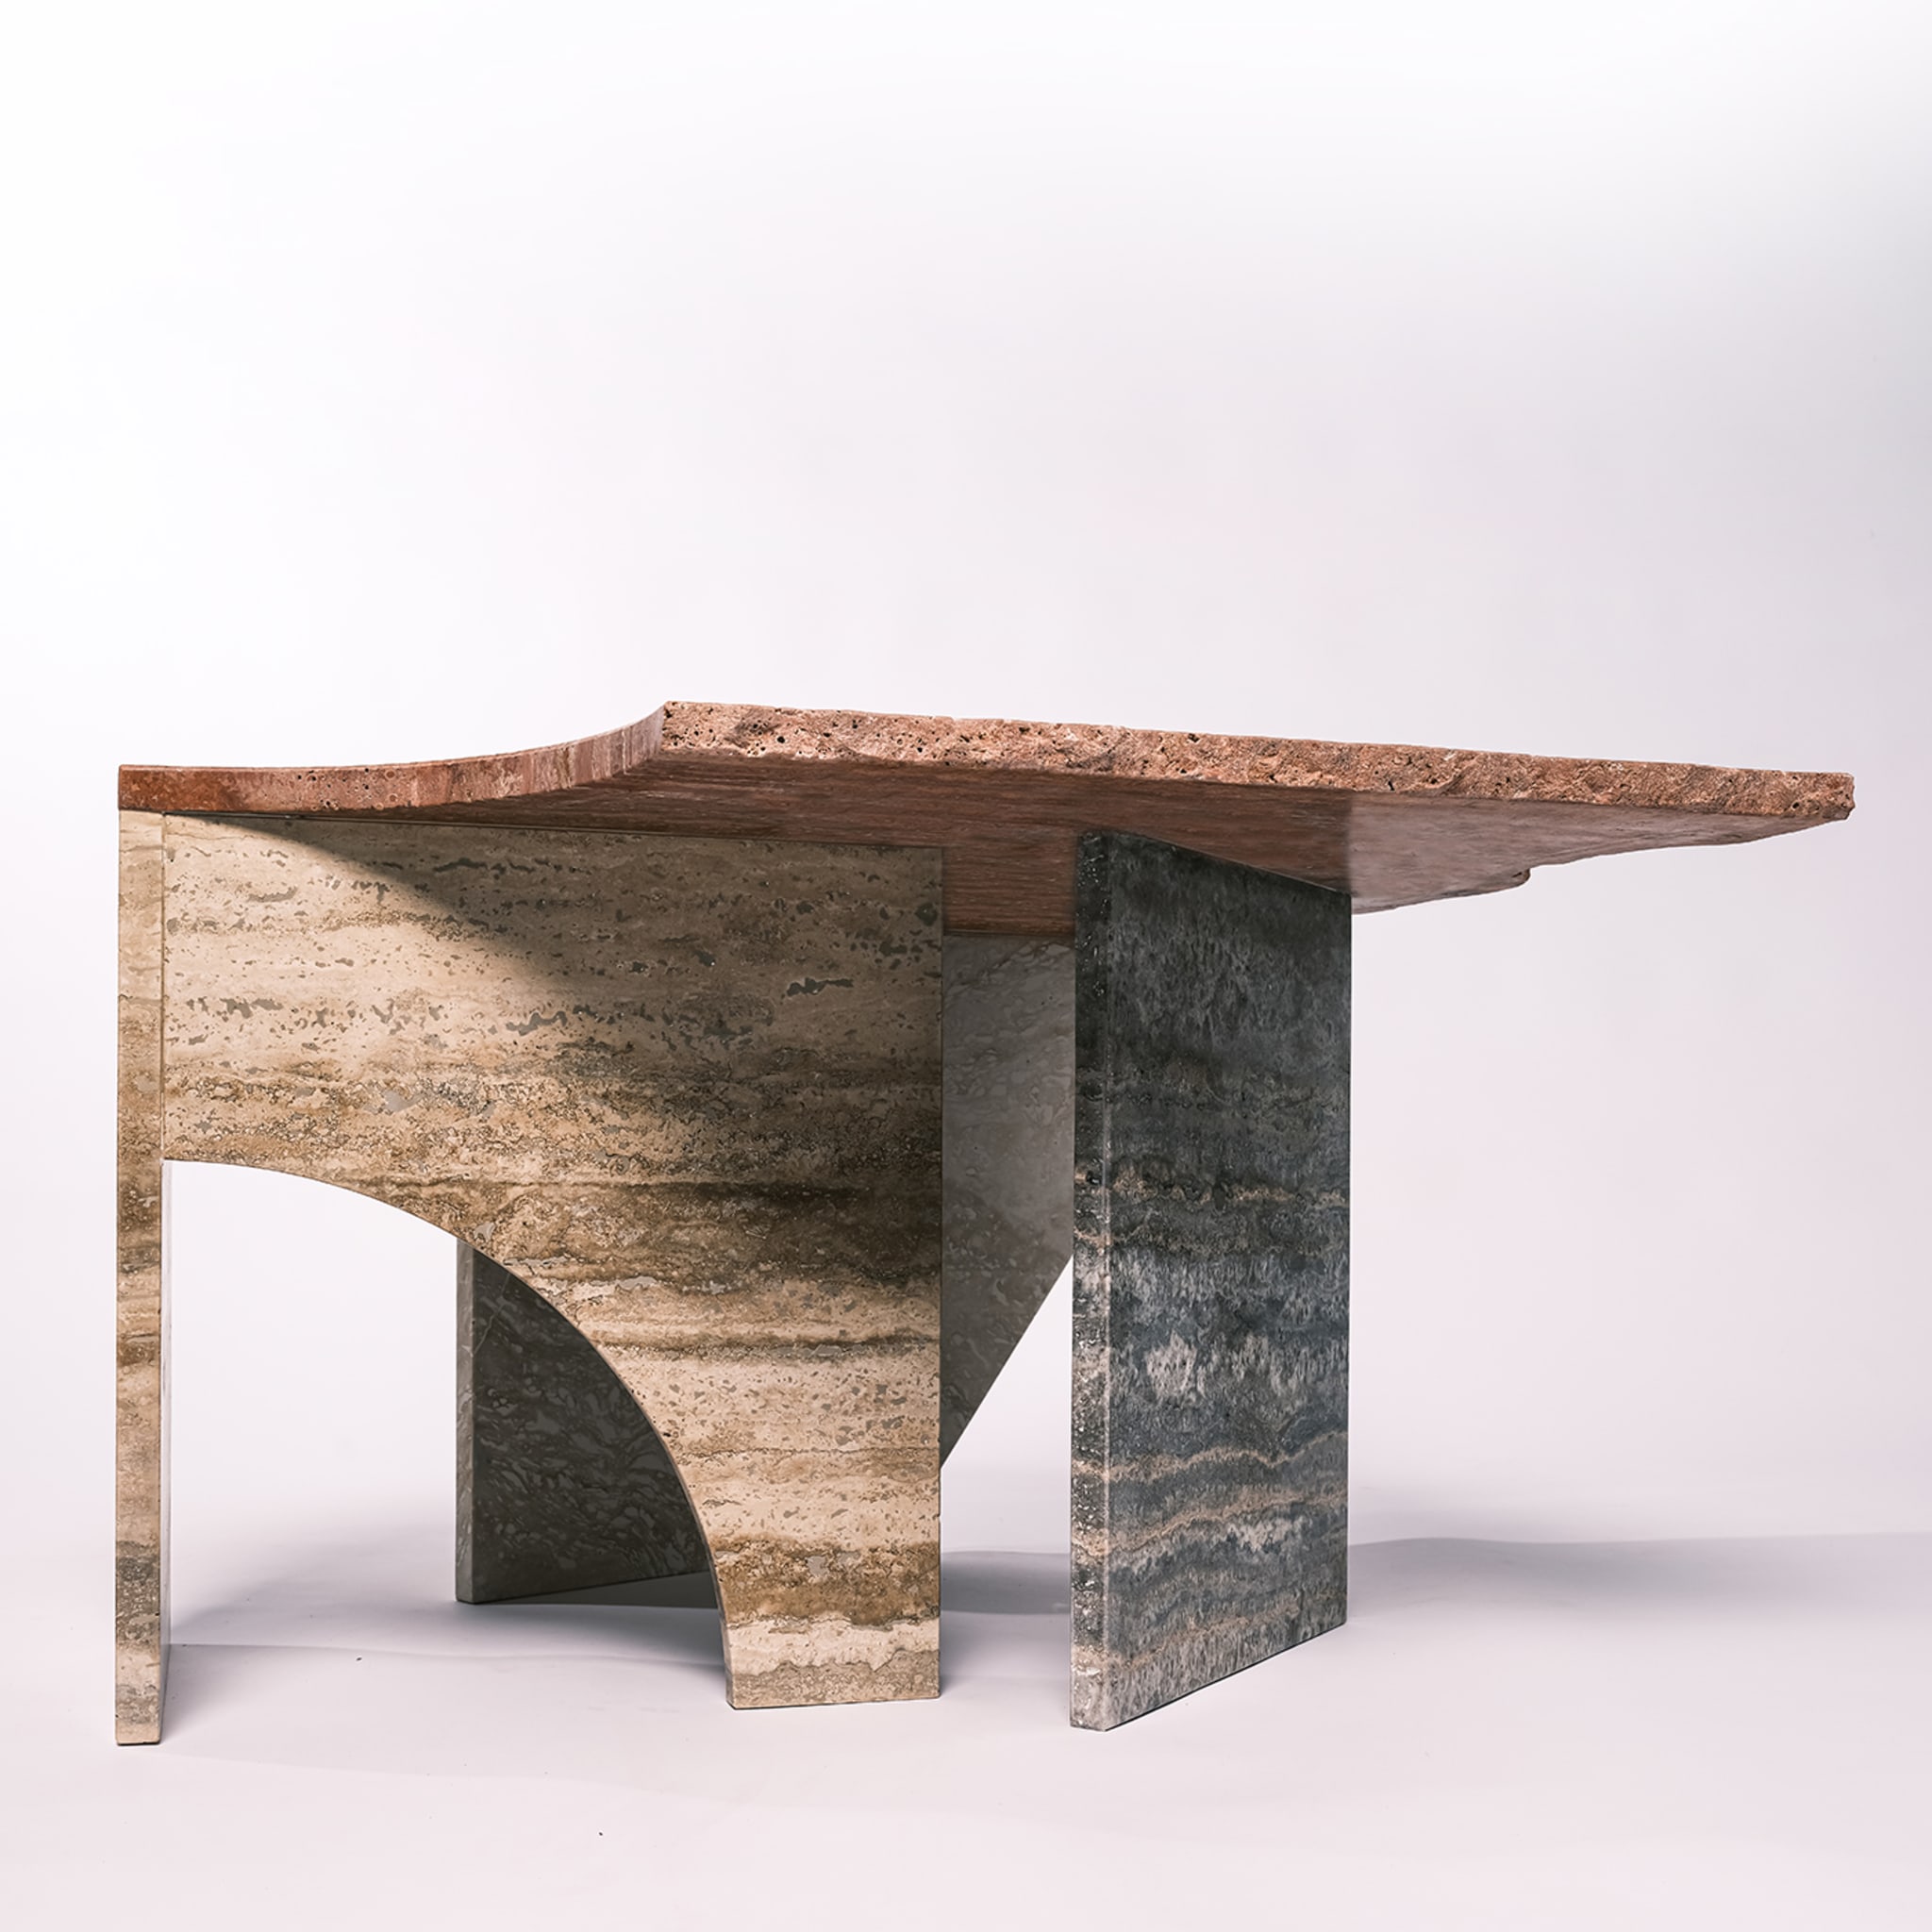 Ritagli B Asymmetrical Coffee Table #2 by Studiopepe Design - Alternative view 4